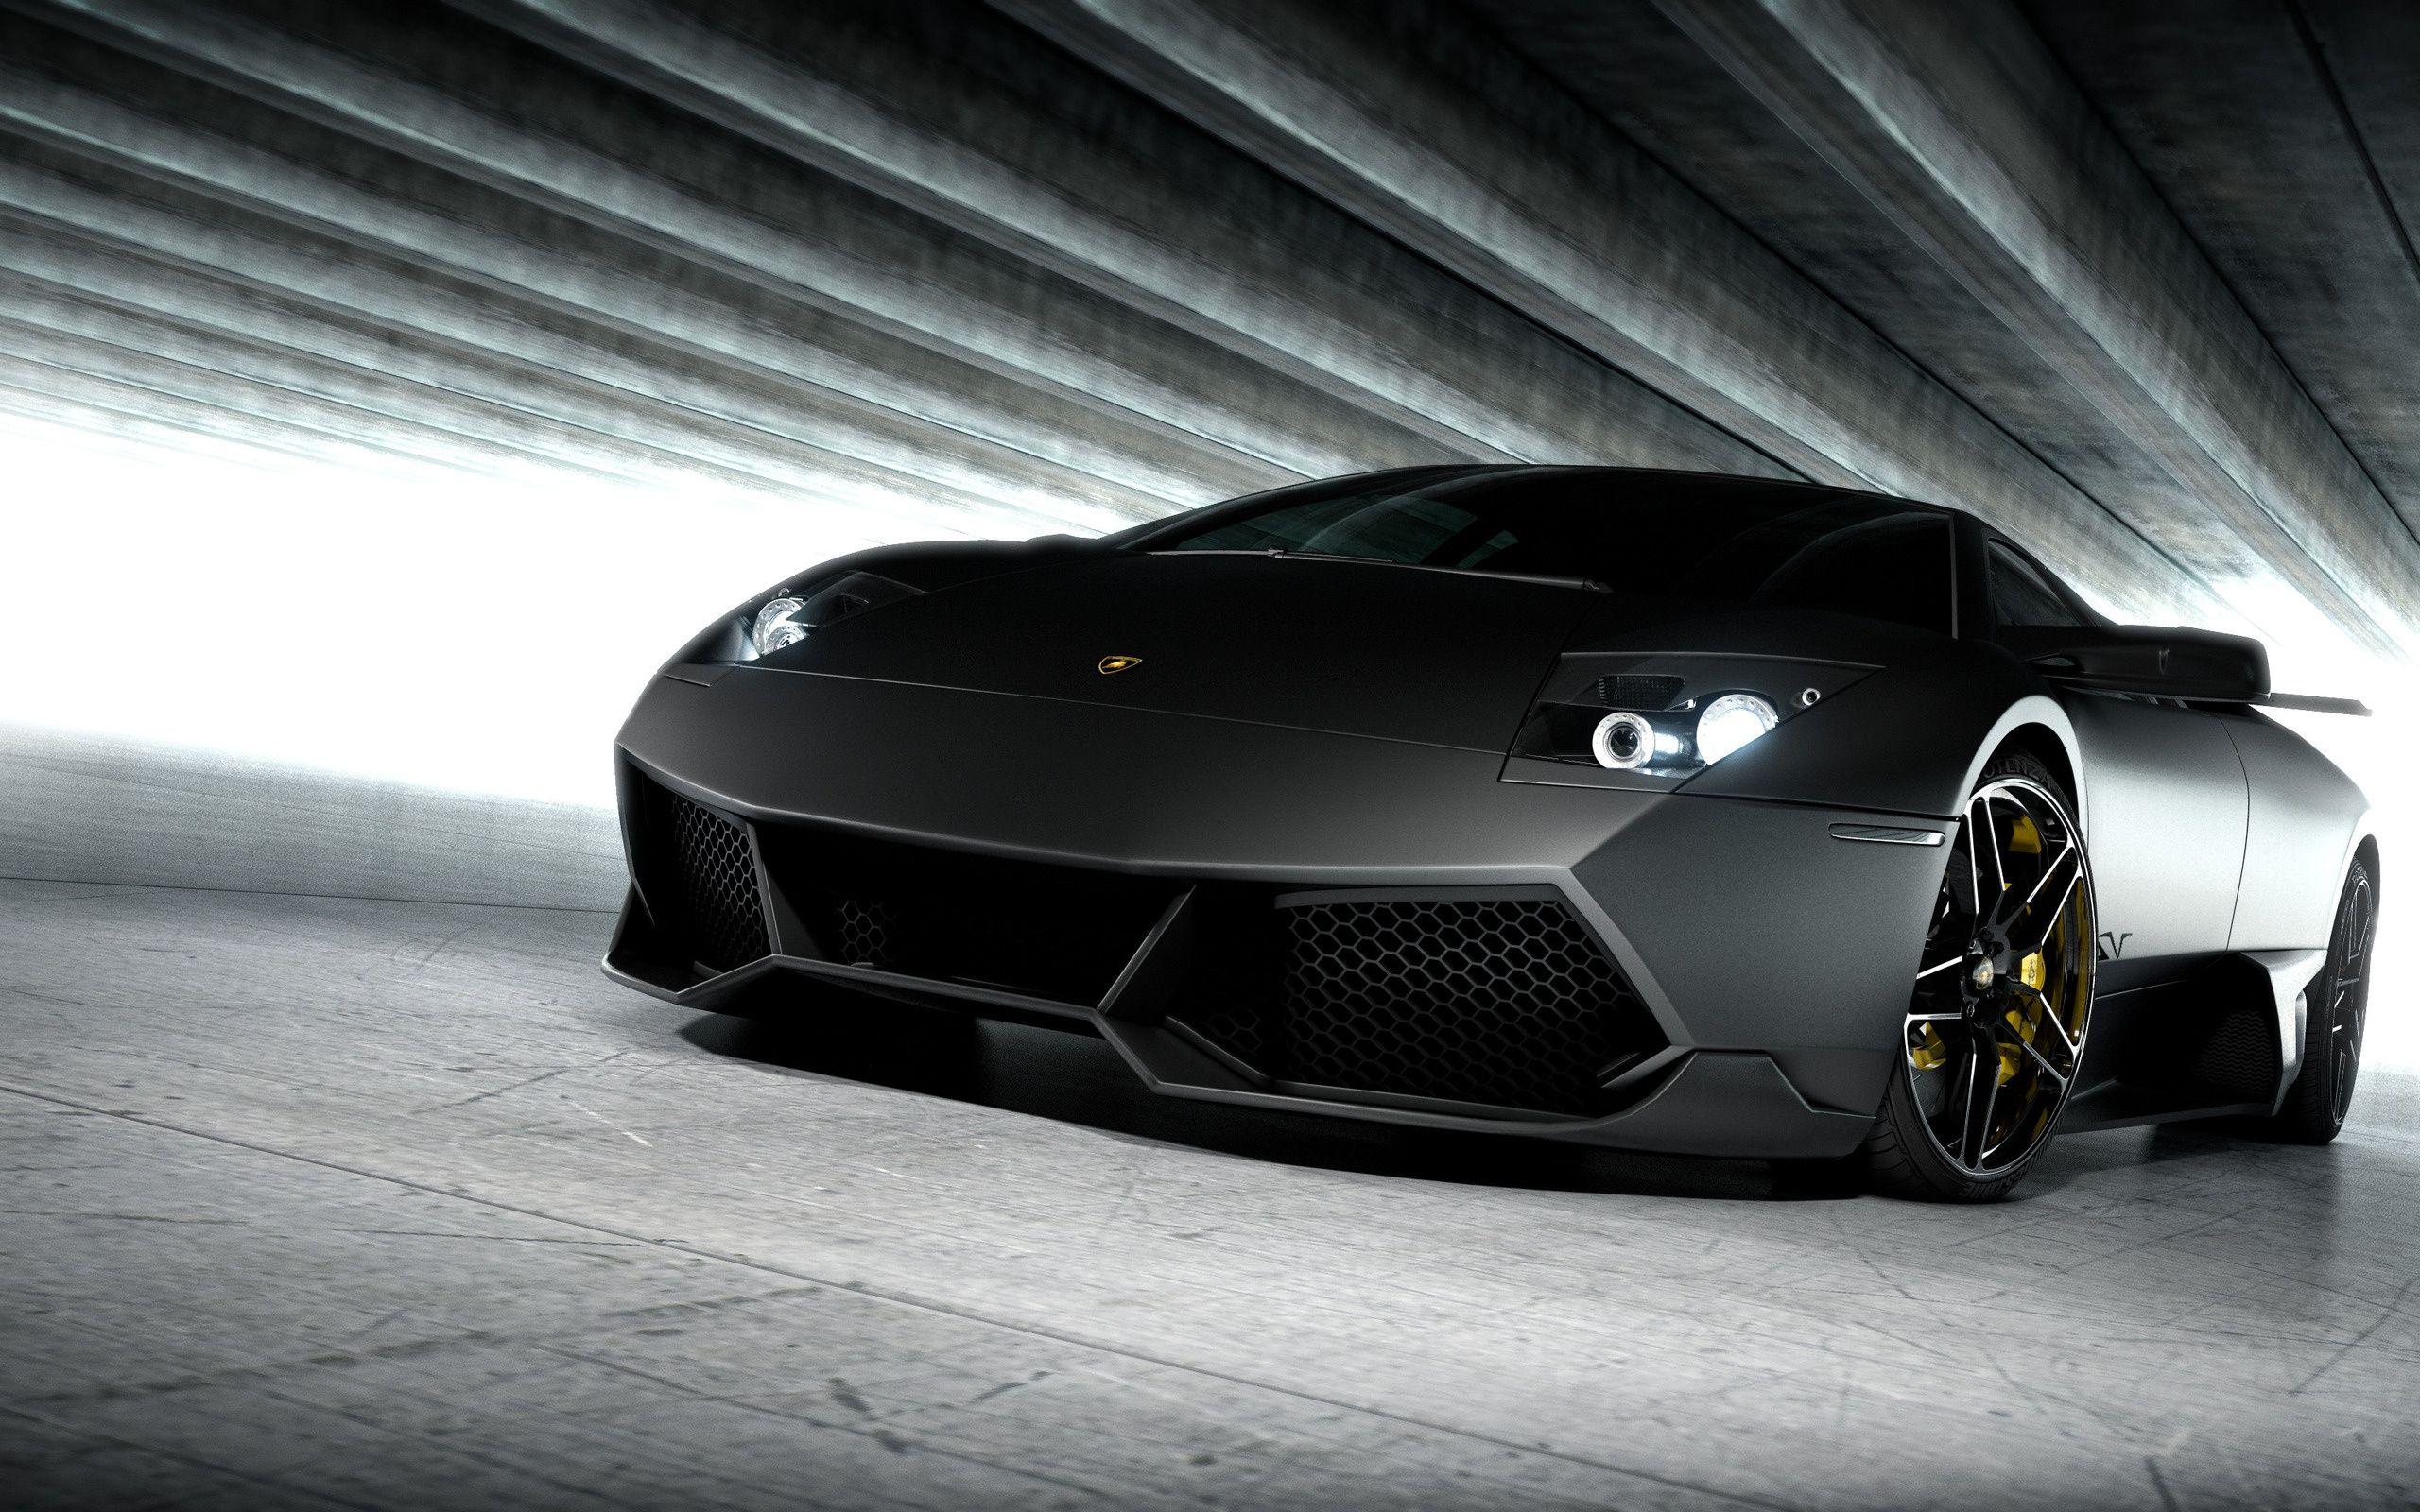 Stunning Lamborghini WallPaper HD W Auto